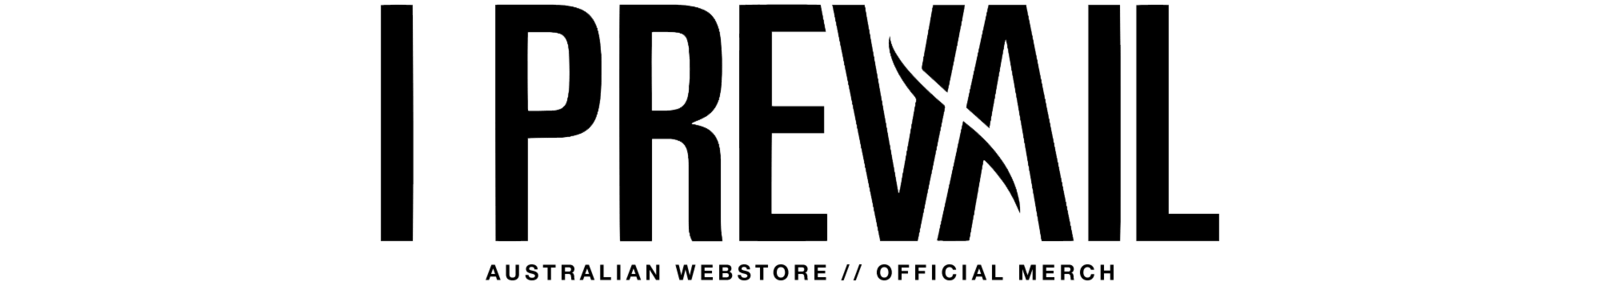 I Prevail Logo - I Prevail - Official Australian Webstore – Artist First